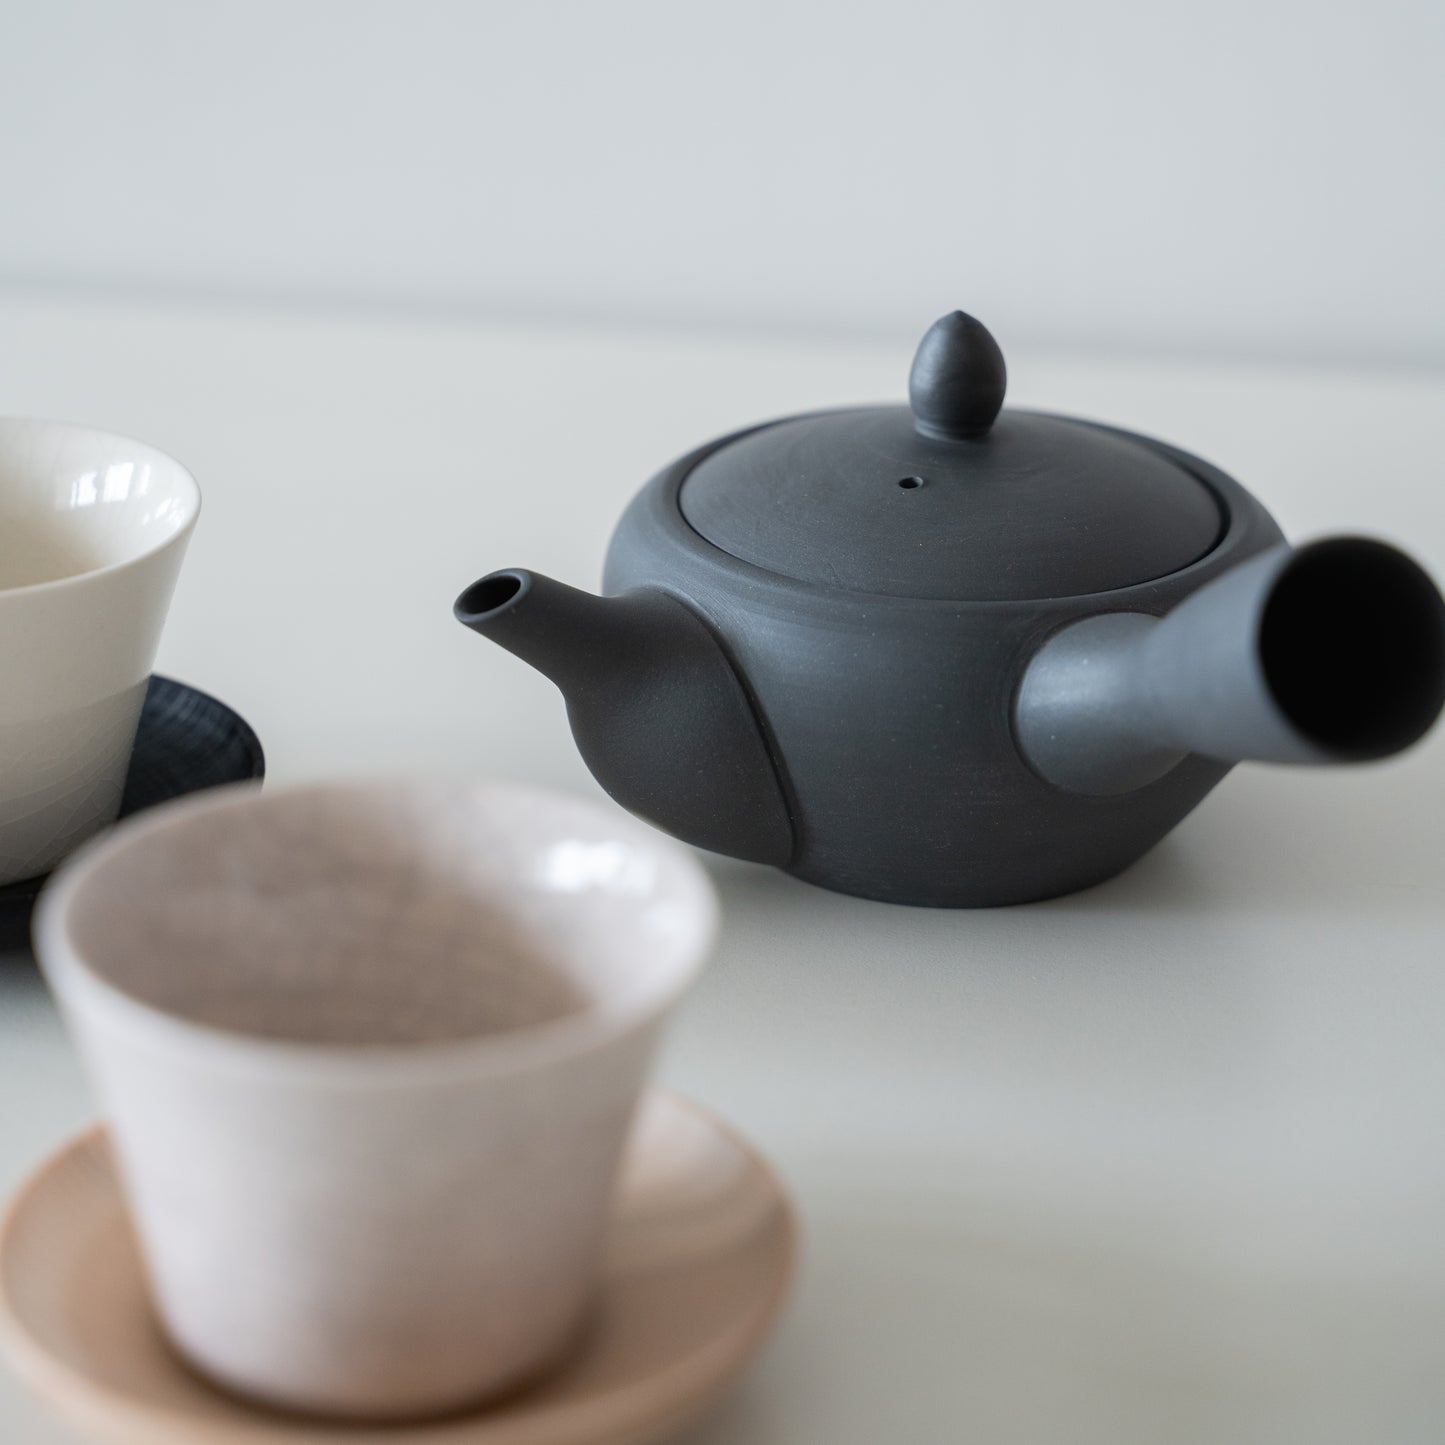 Japanese Teapot (Kyusu) with Stainless Steel Bottom Mesh - Black